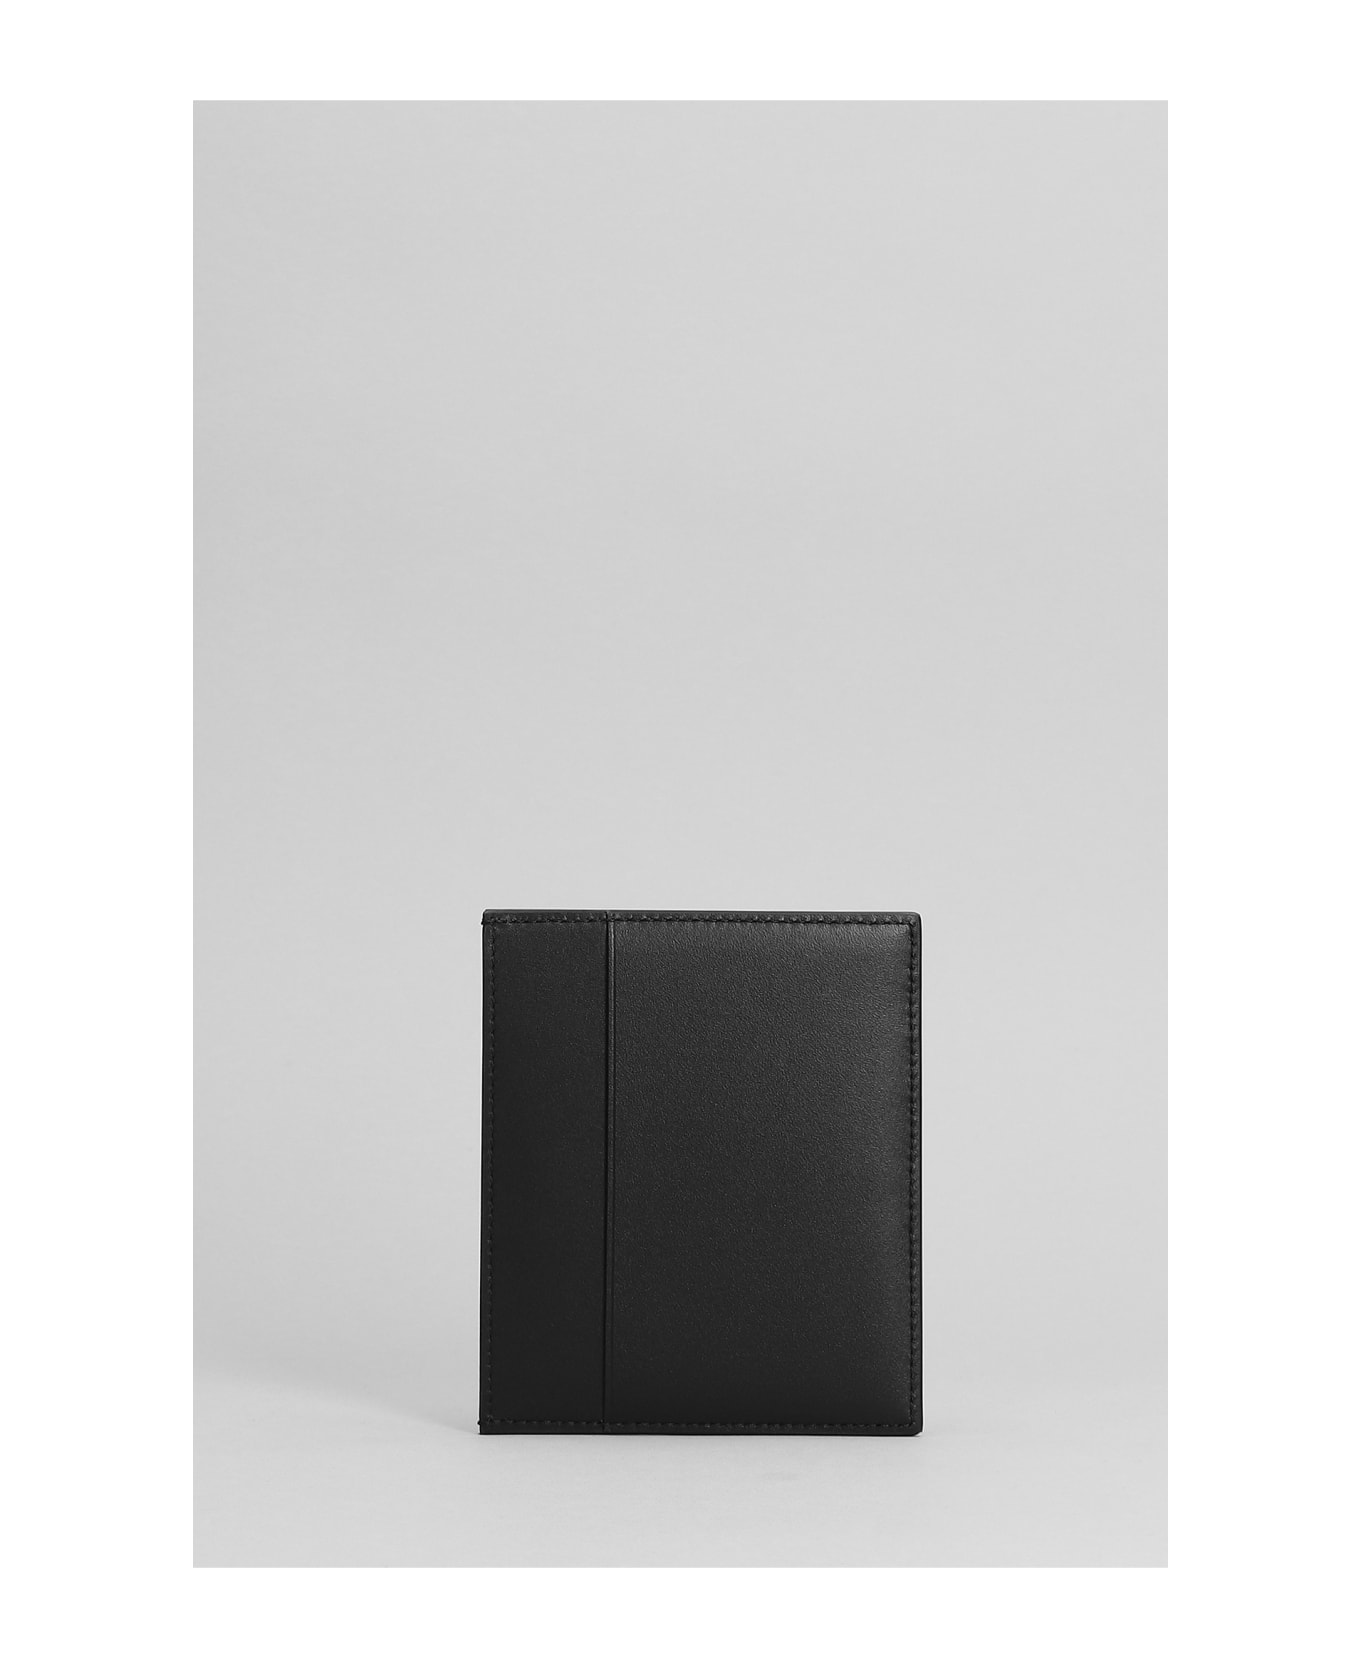 Jil Sander Wallet In Black Leather